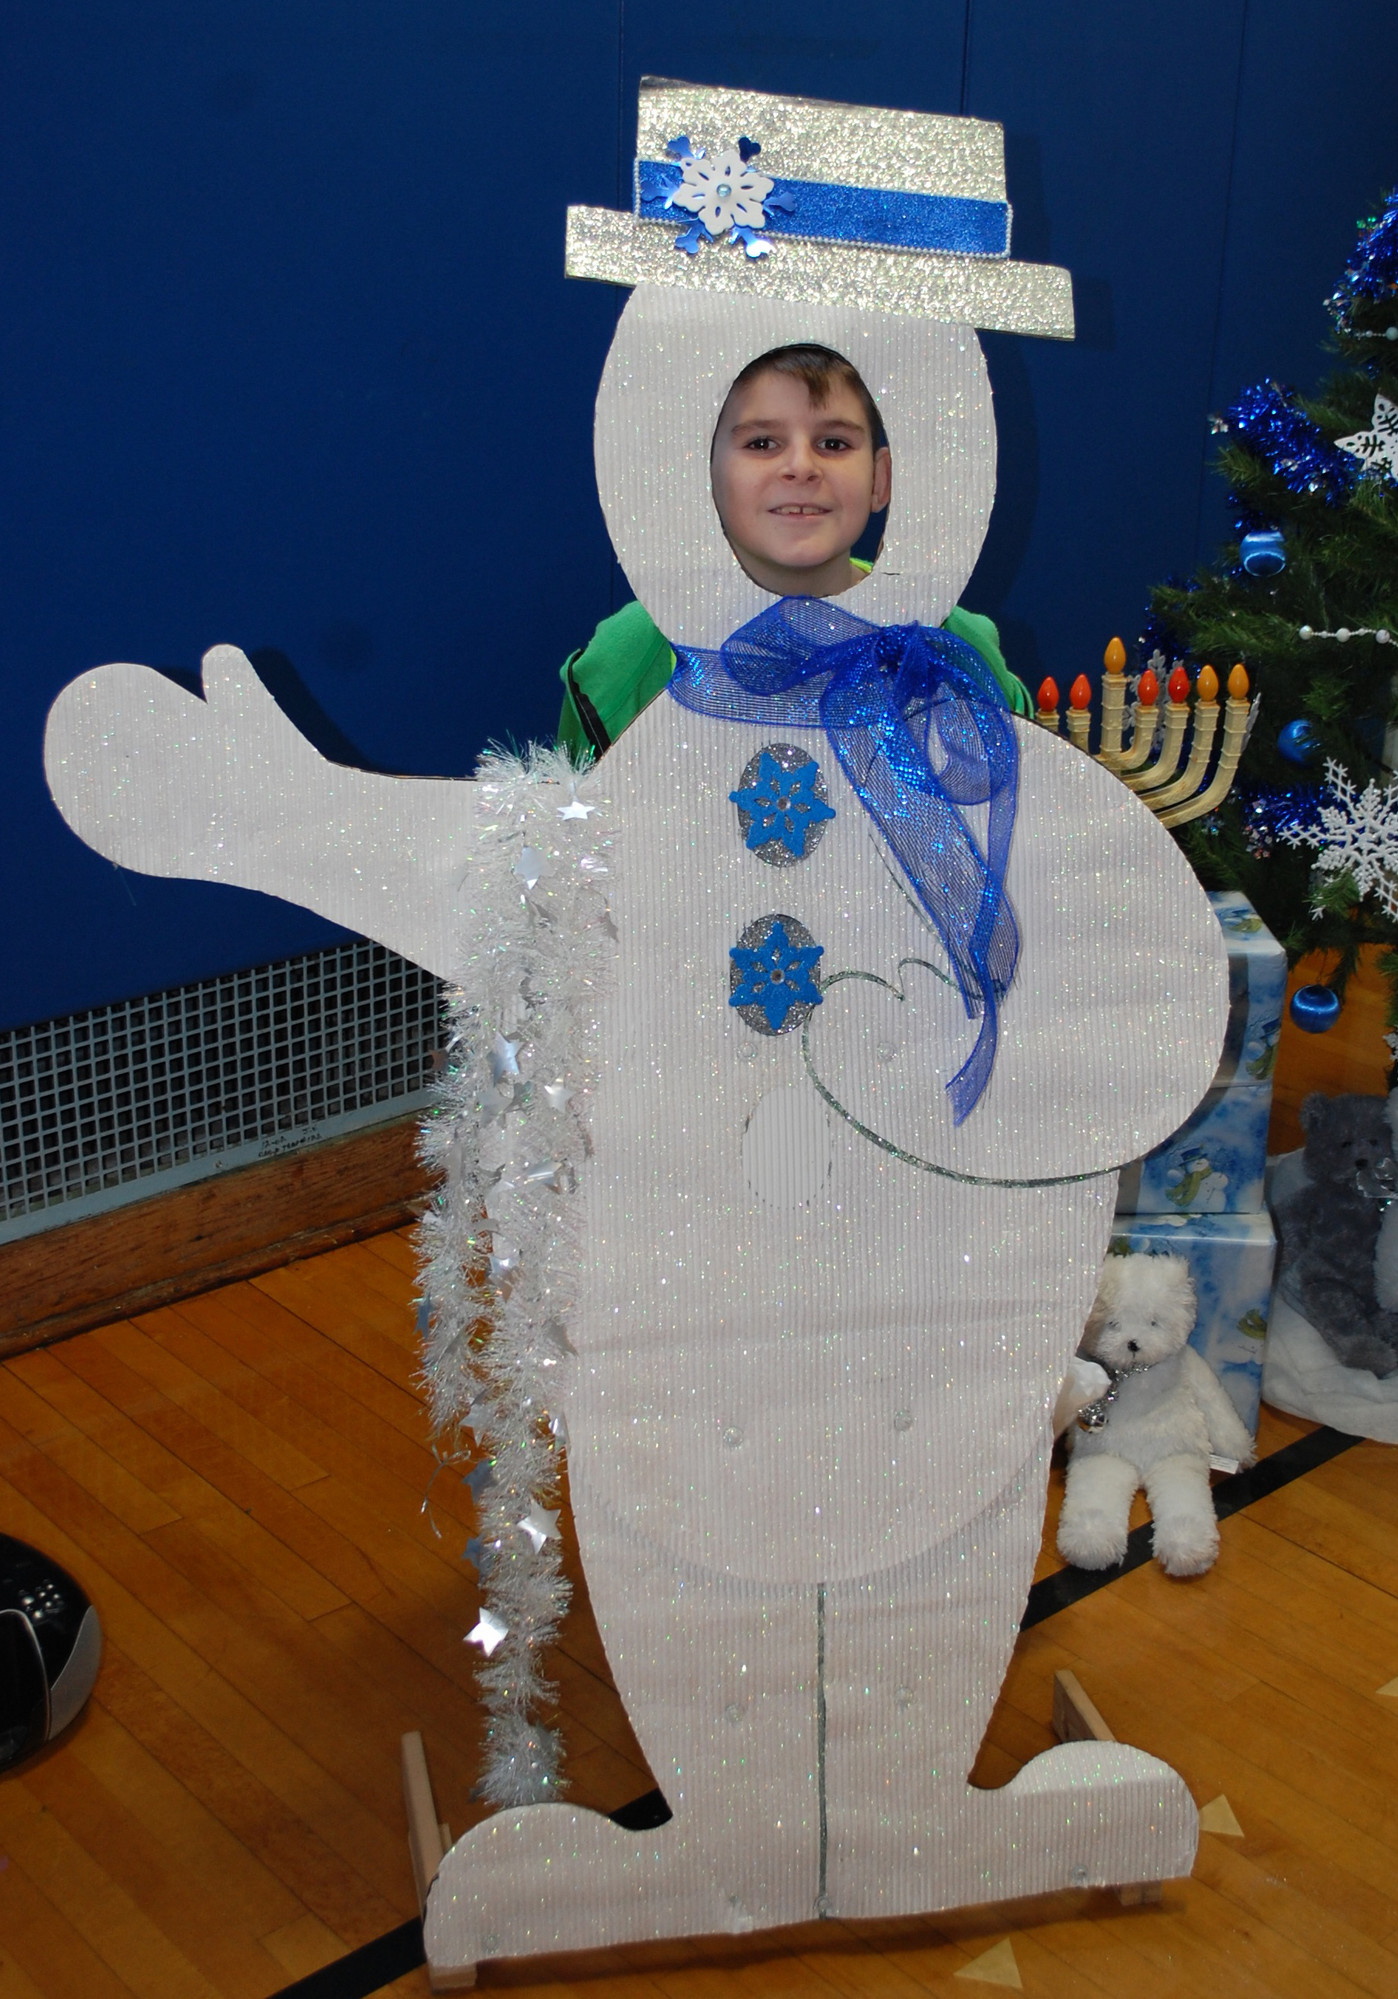 Fifth-grader Jared Saloman transformed into a snowman.